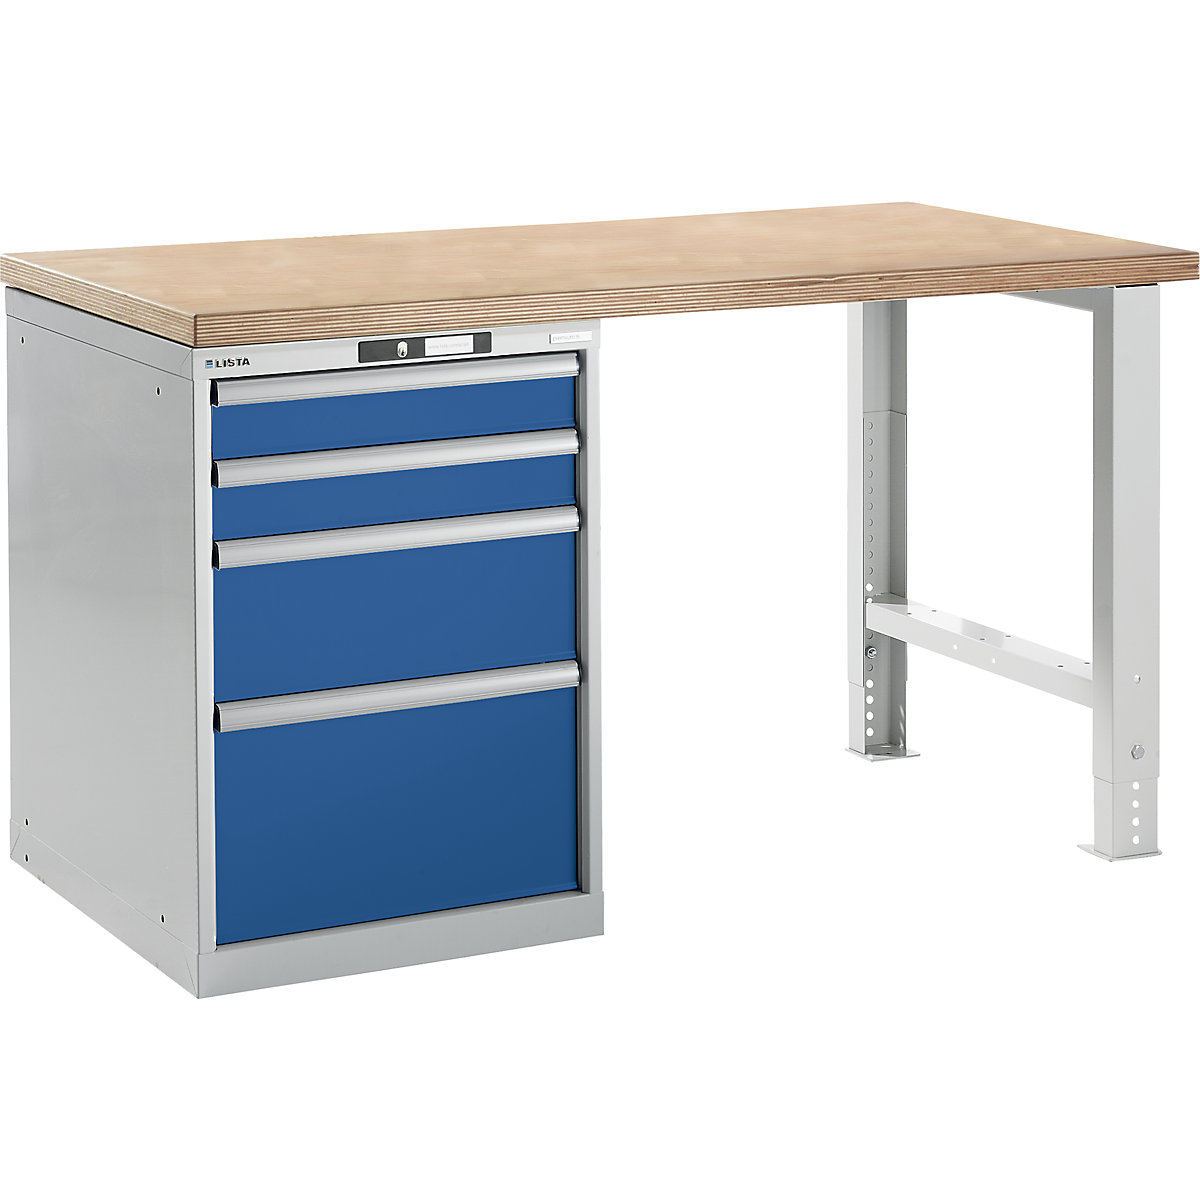 Modular workbench – LISTA, height 840 mm, pedestal drawer unit, 4 drawers, gentian blue, table width 1500 mm-15